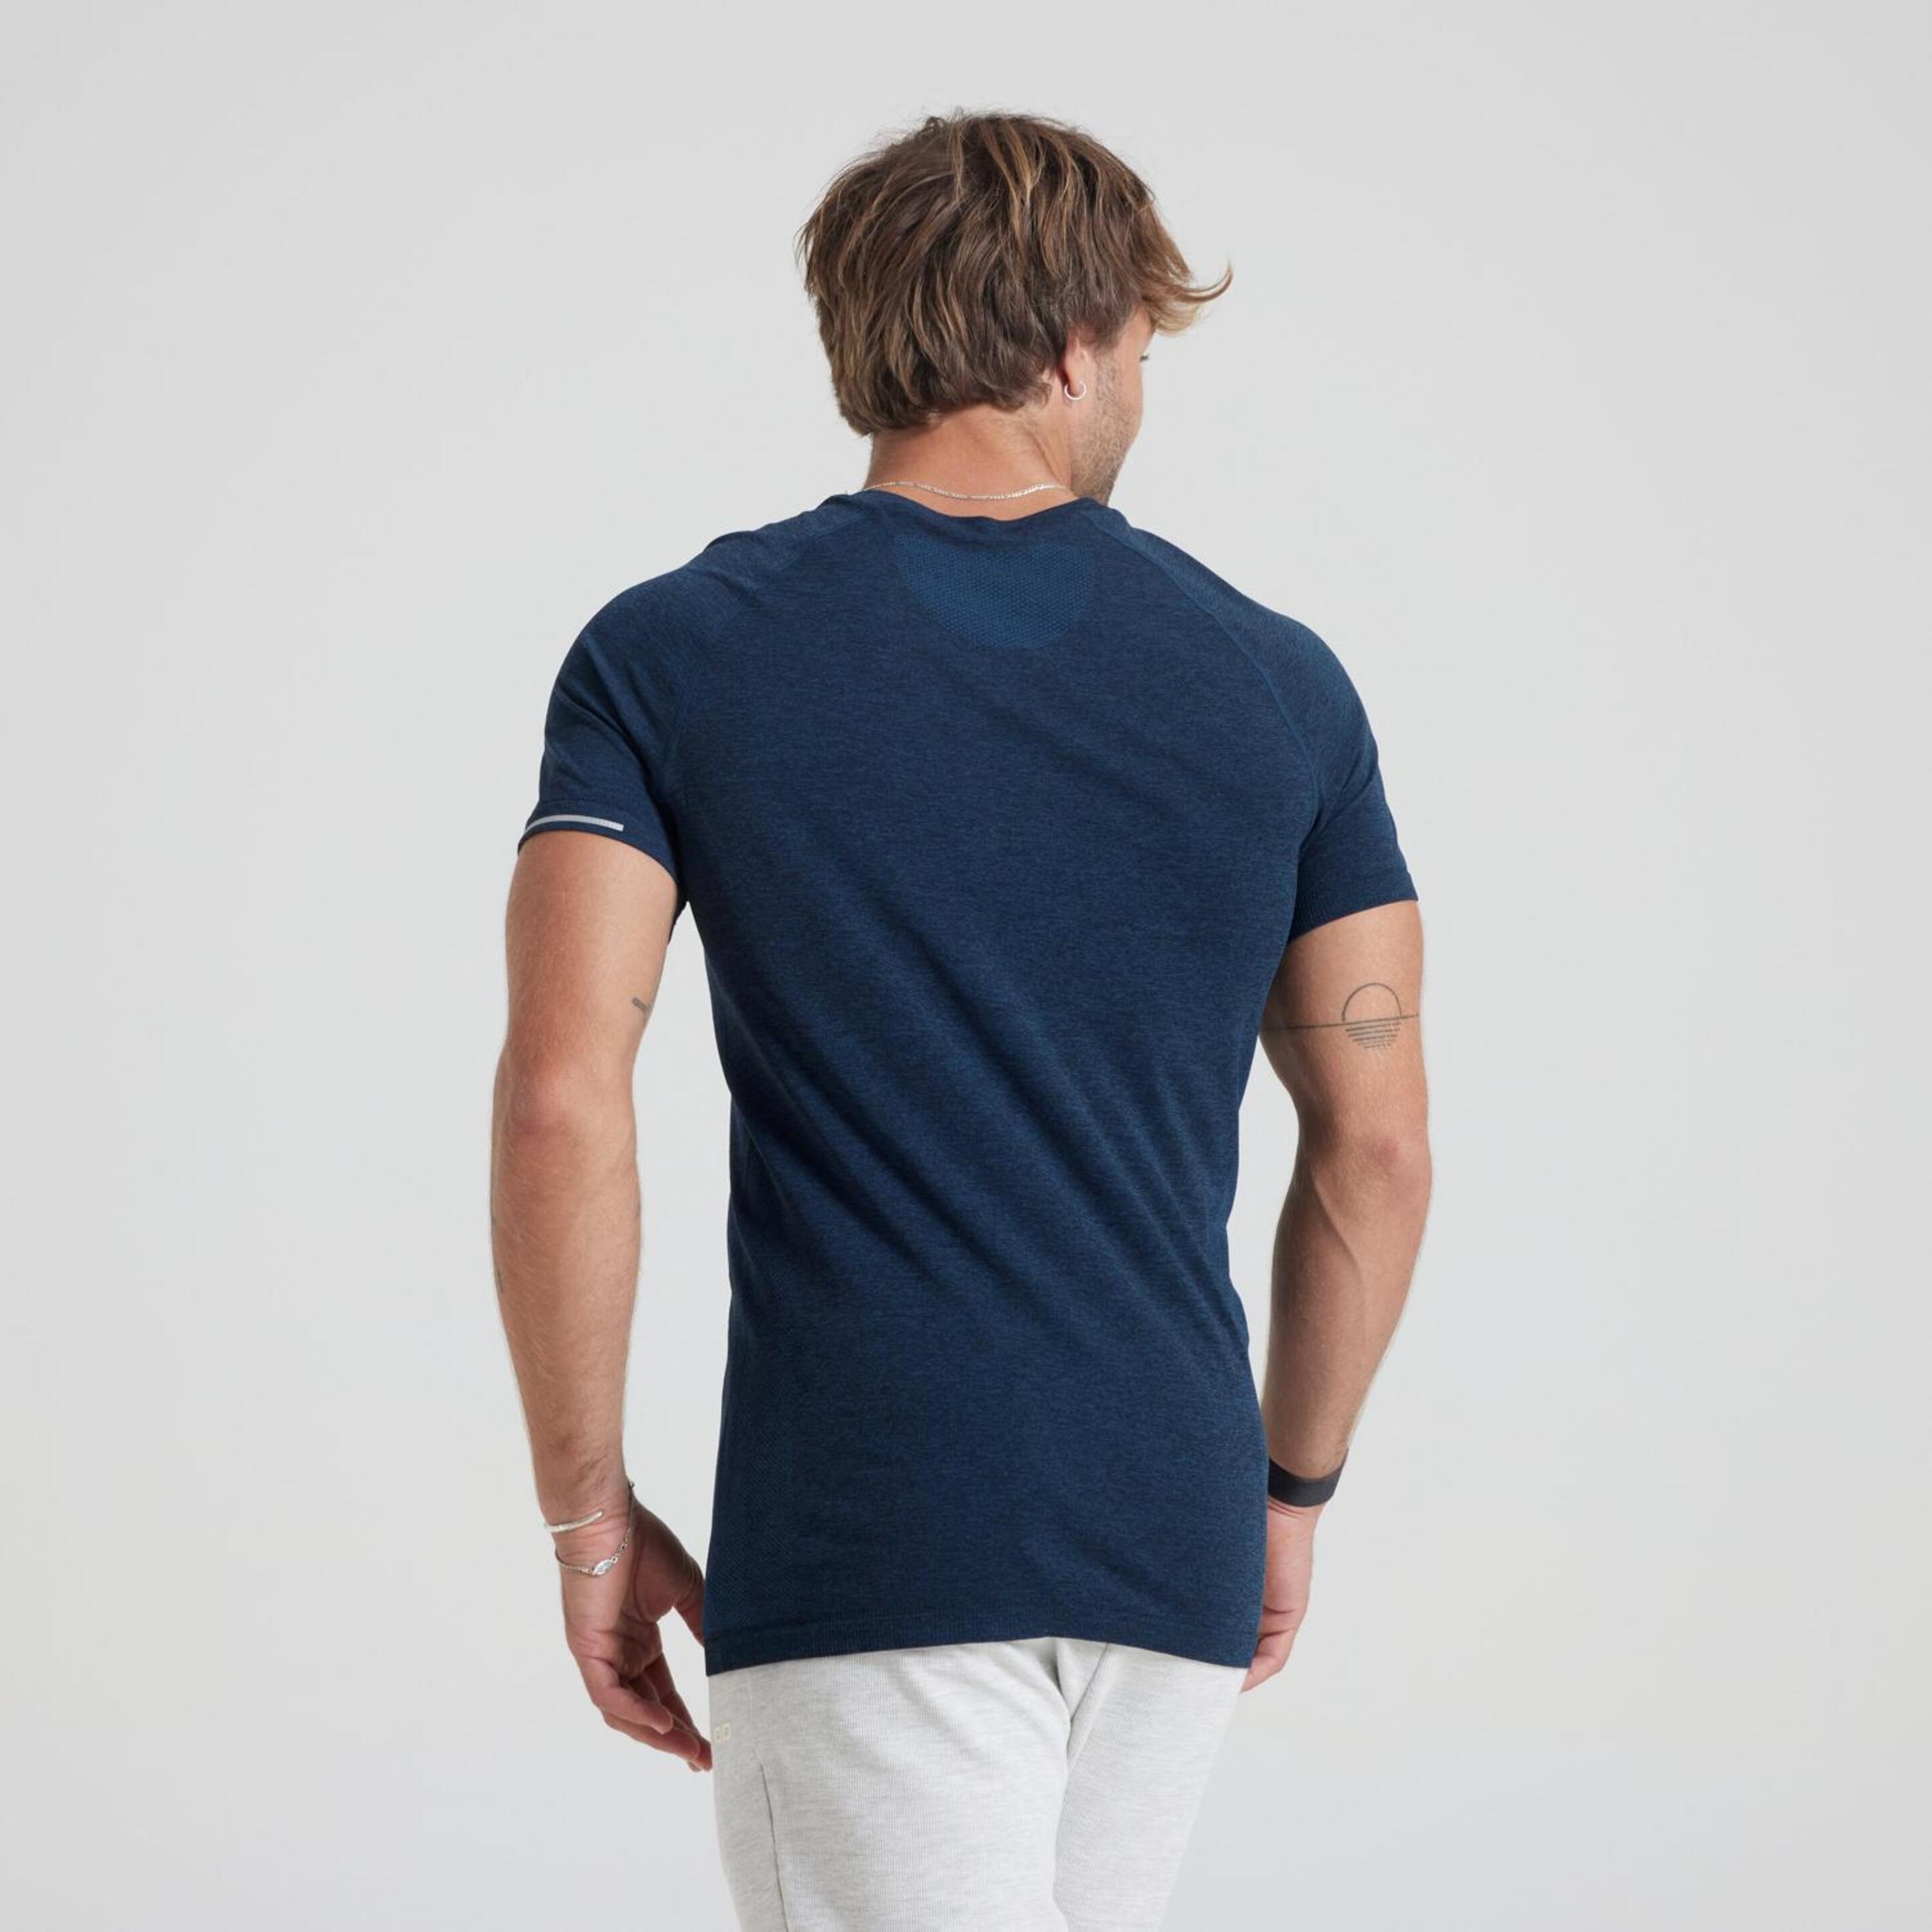 Doone Activ  - Marino - Camiseta Sin Costuras Hombre